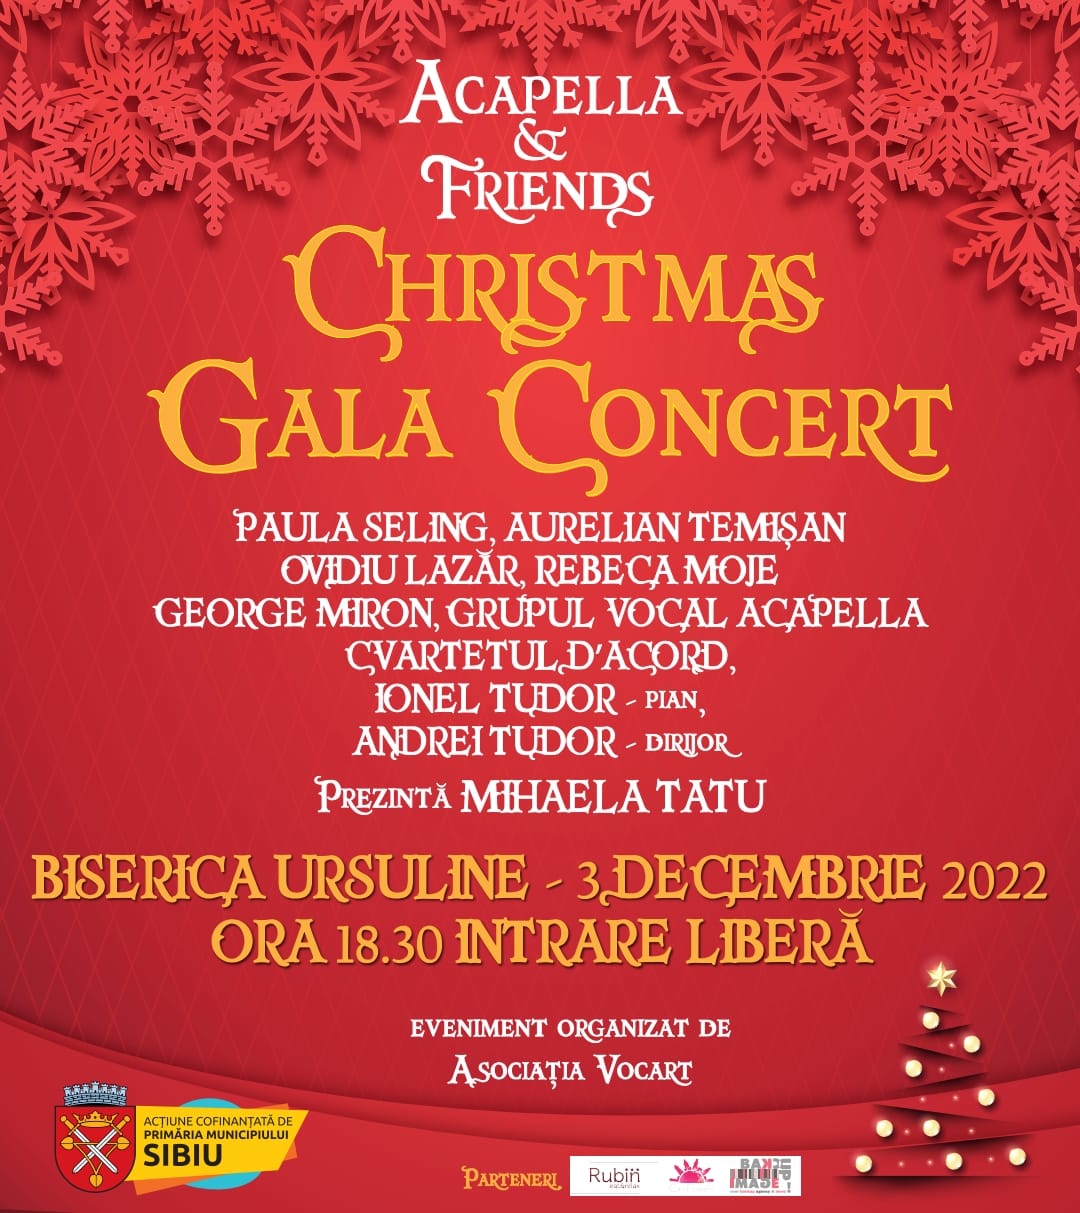 Christmas Gala Concert "Acapella & Friends"